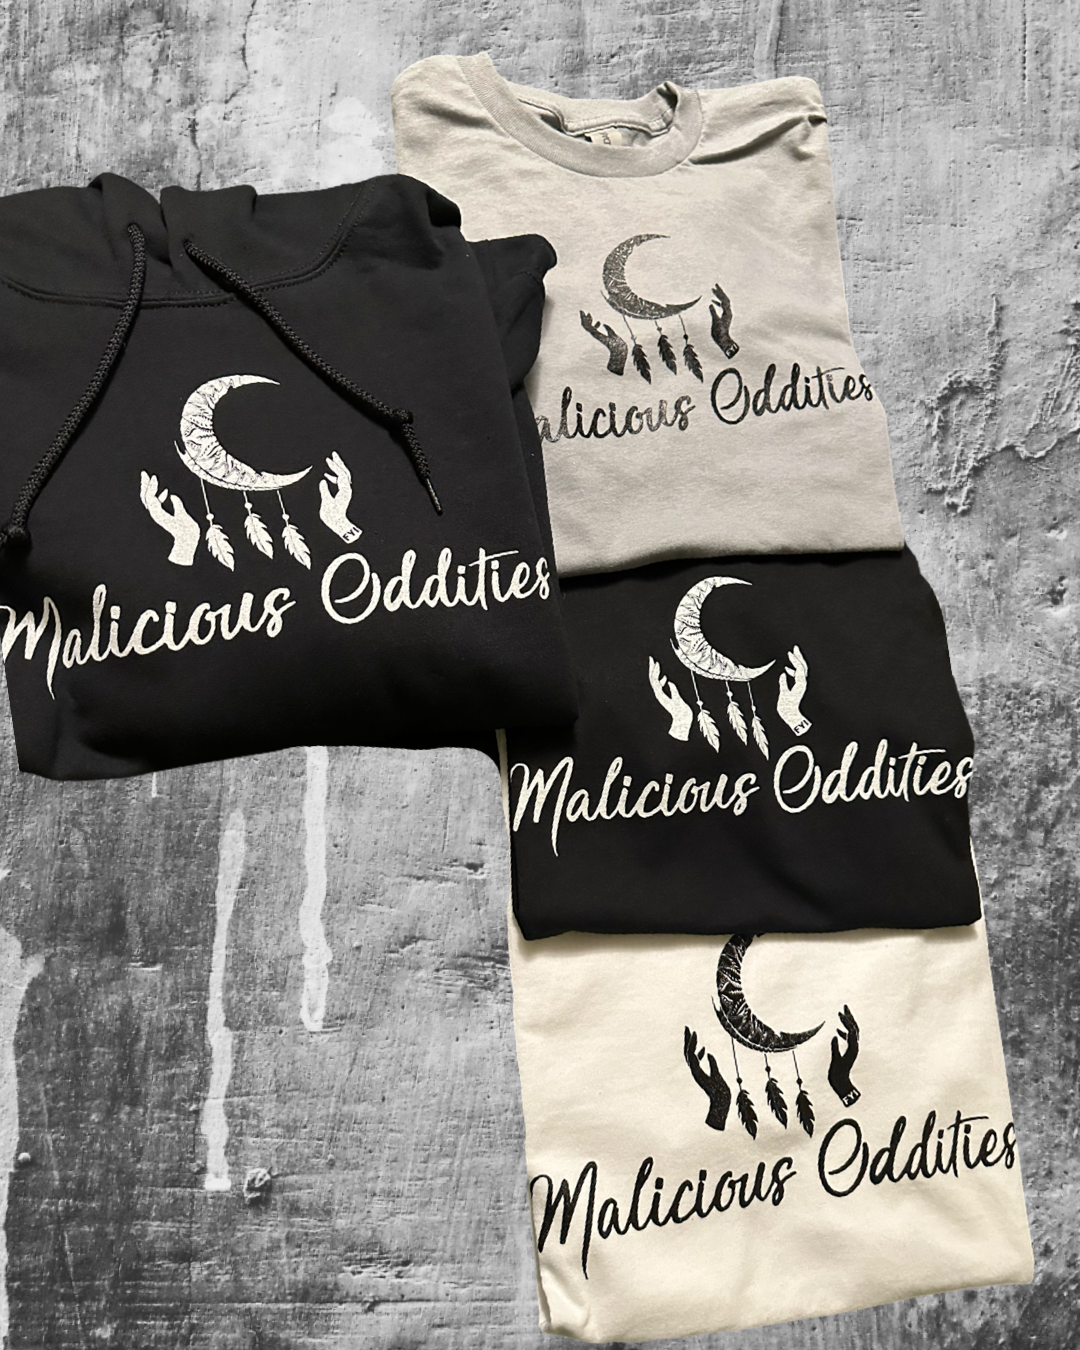 Malicious Oddities T-Shirt